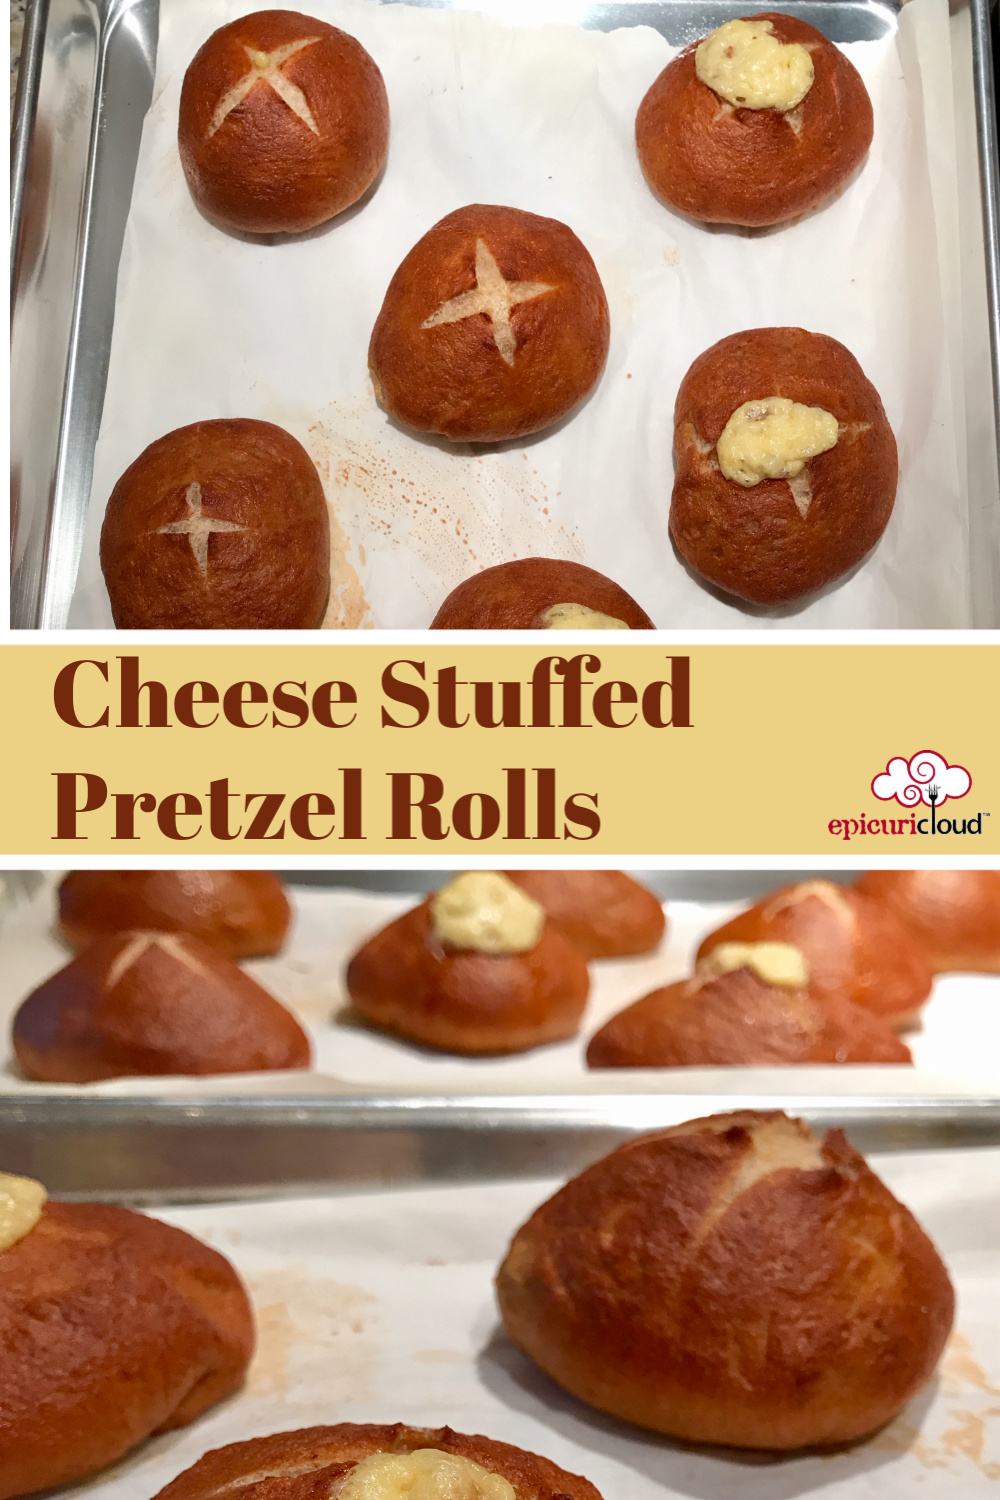 https://www.epicuricloud.com/wp-content/uploads/2017/11/Cheese-Stuffed-Pretzel-Rolls-2.jpg